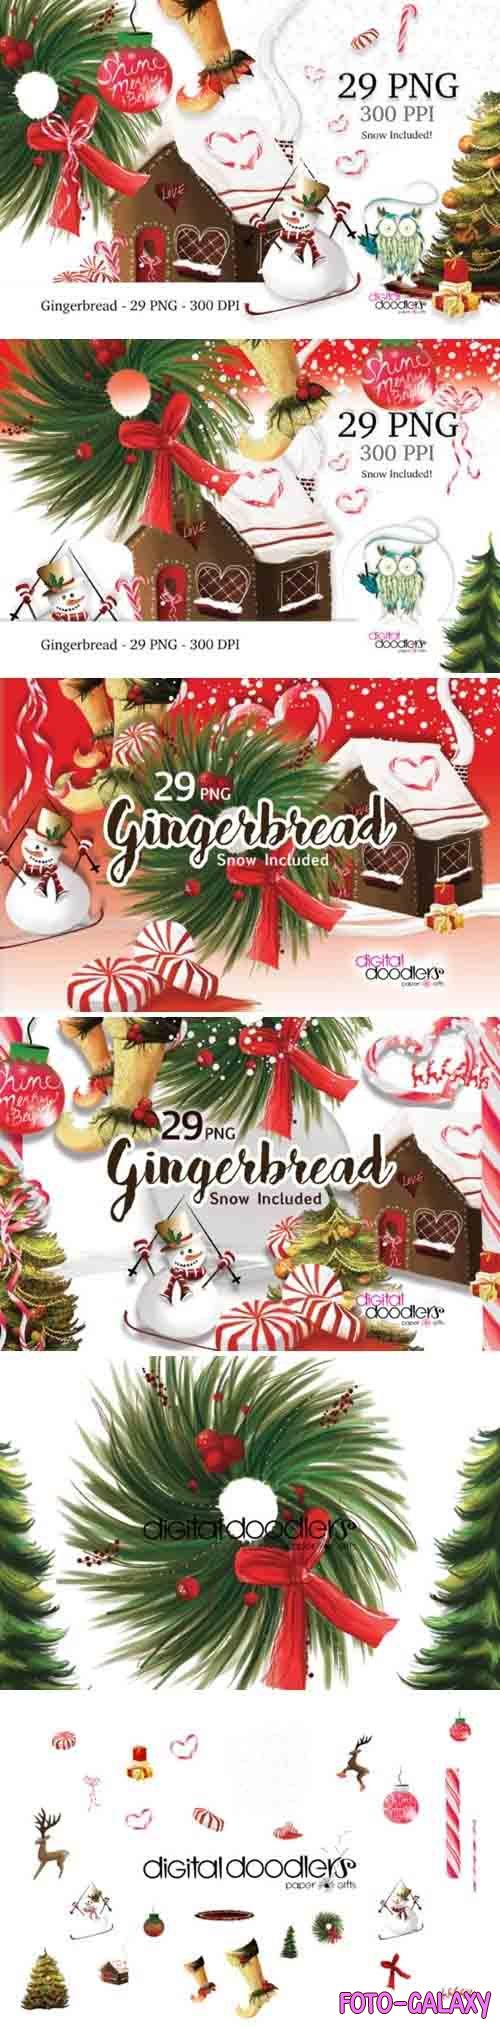 Gingerbread Christmas Graphics